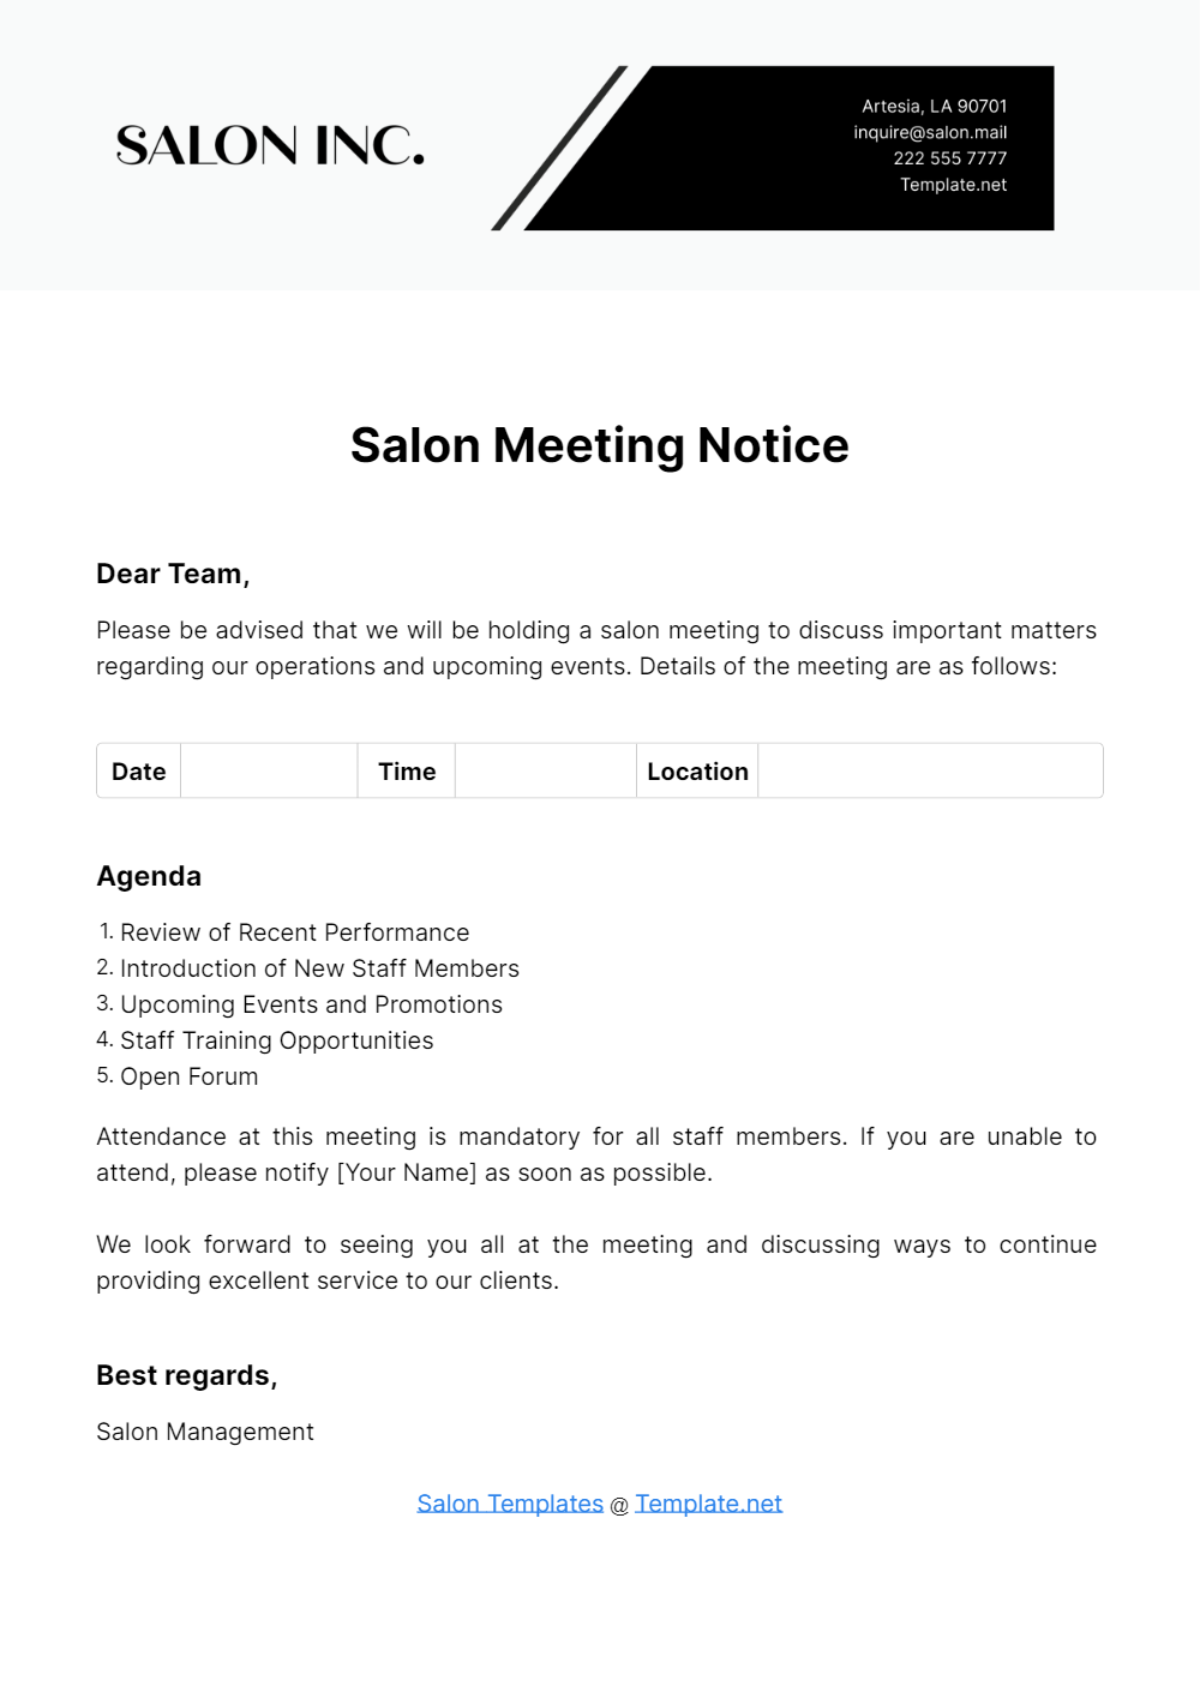 Salon Meeting Notice Template